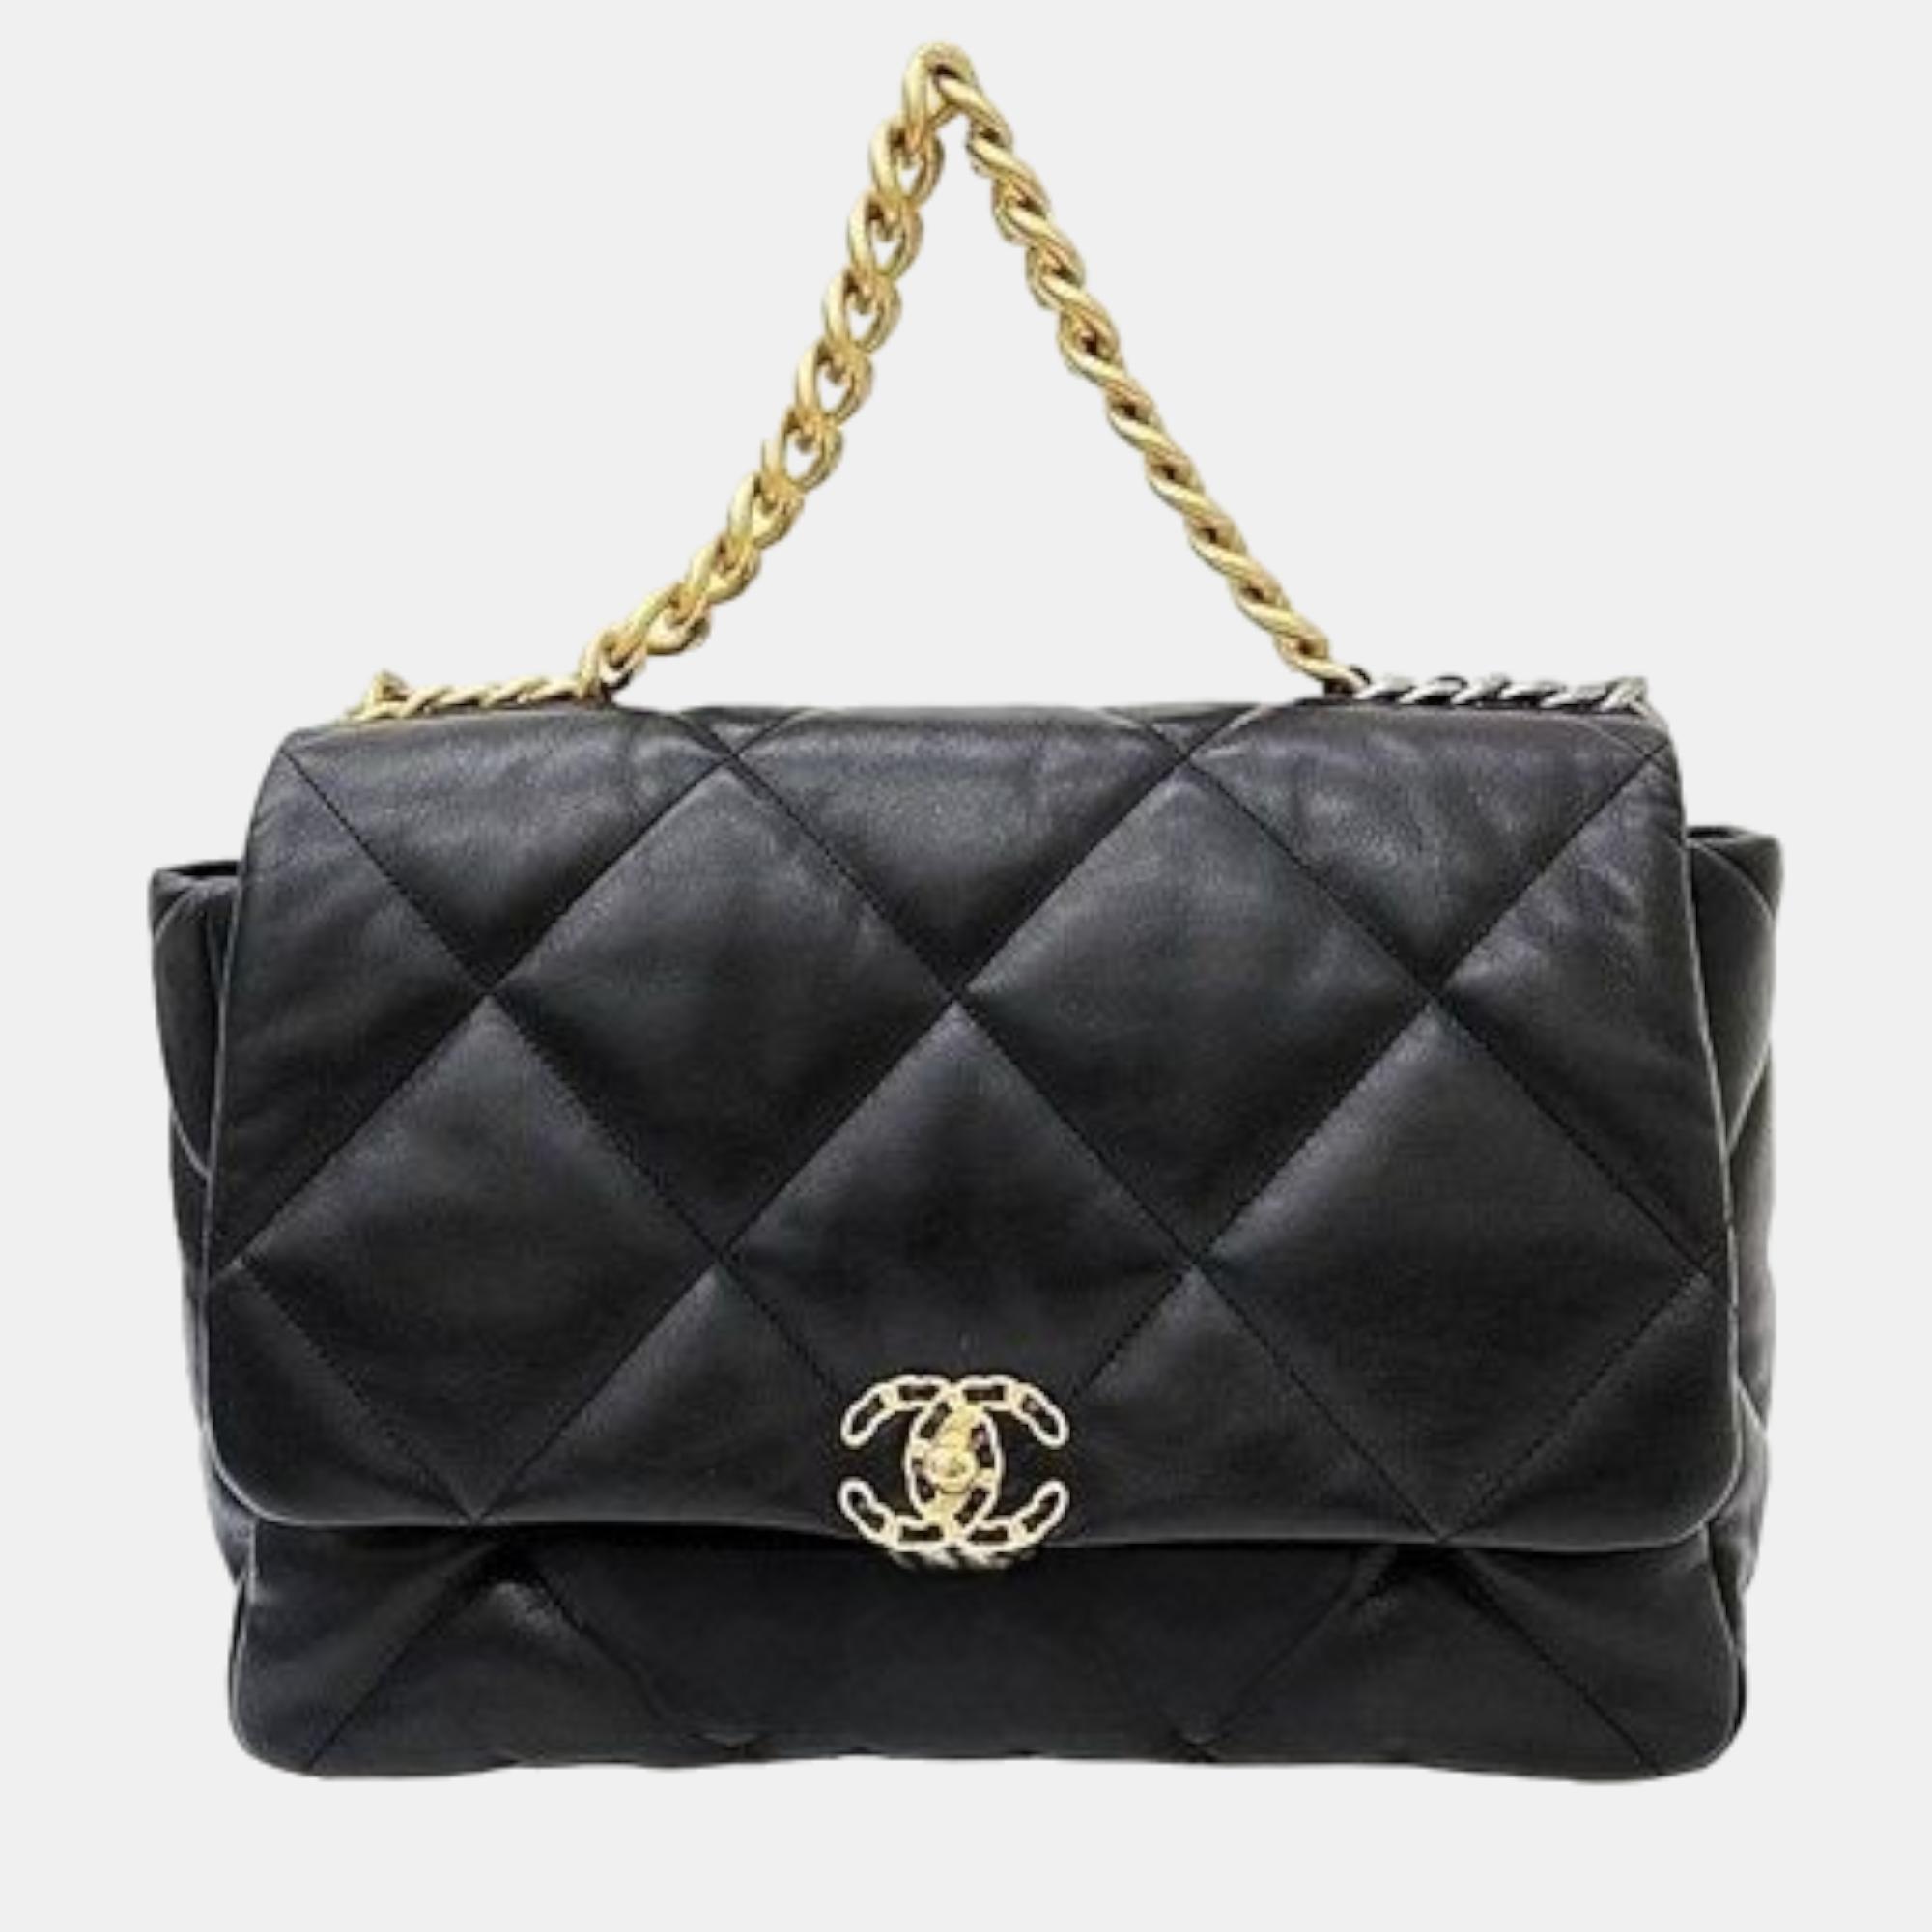 Chanel black leather maxi 19 flap bag